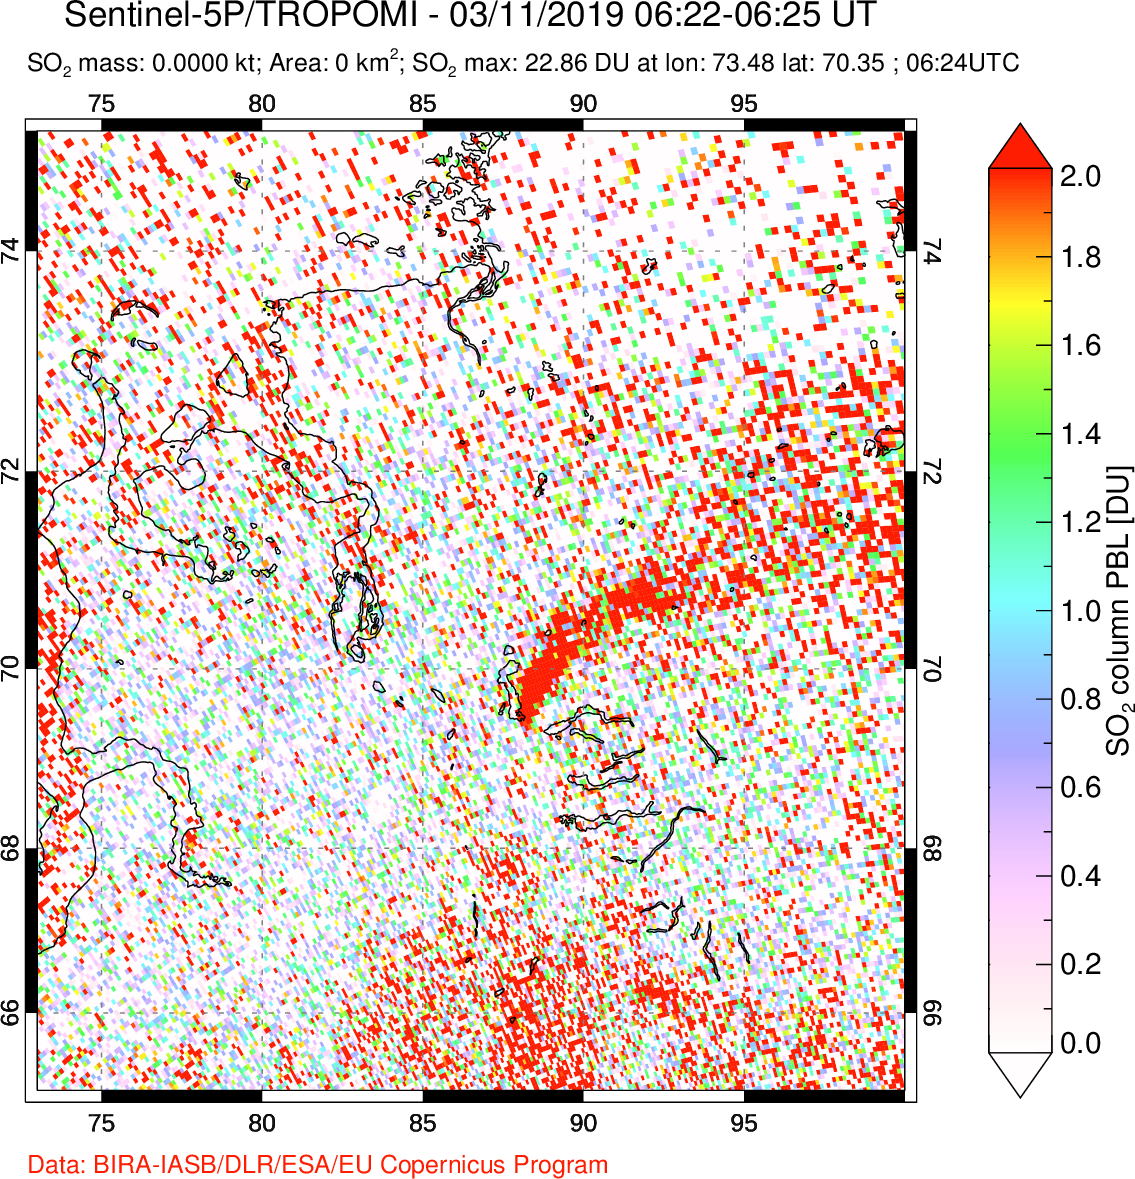 A sulfur dioxide image over Norilsk, Russian Federation on Mar 11, 2019.